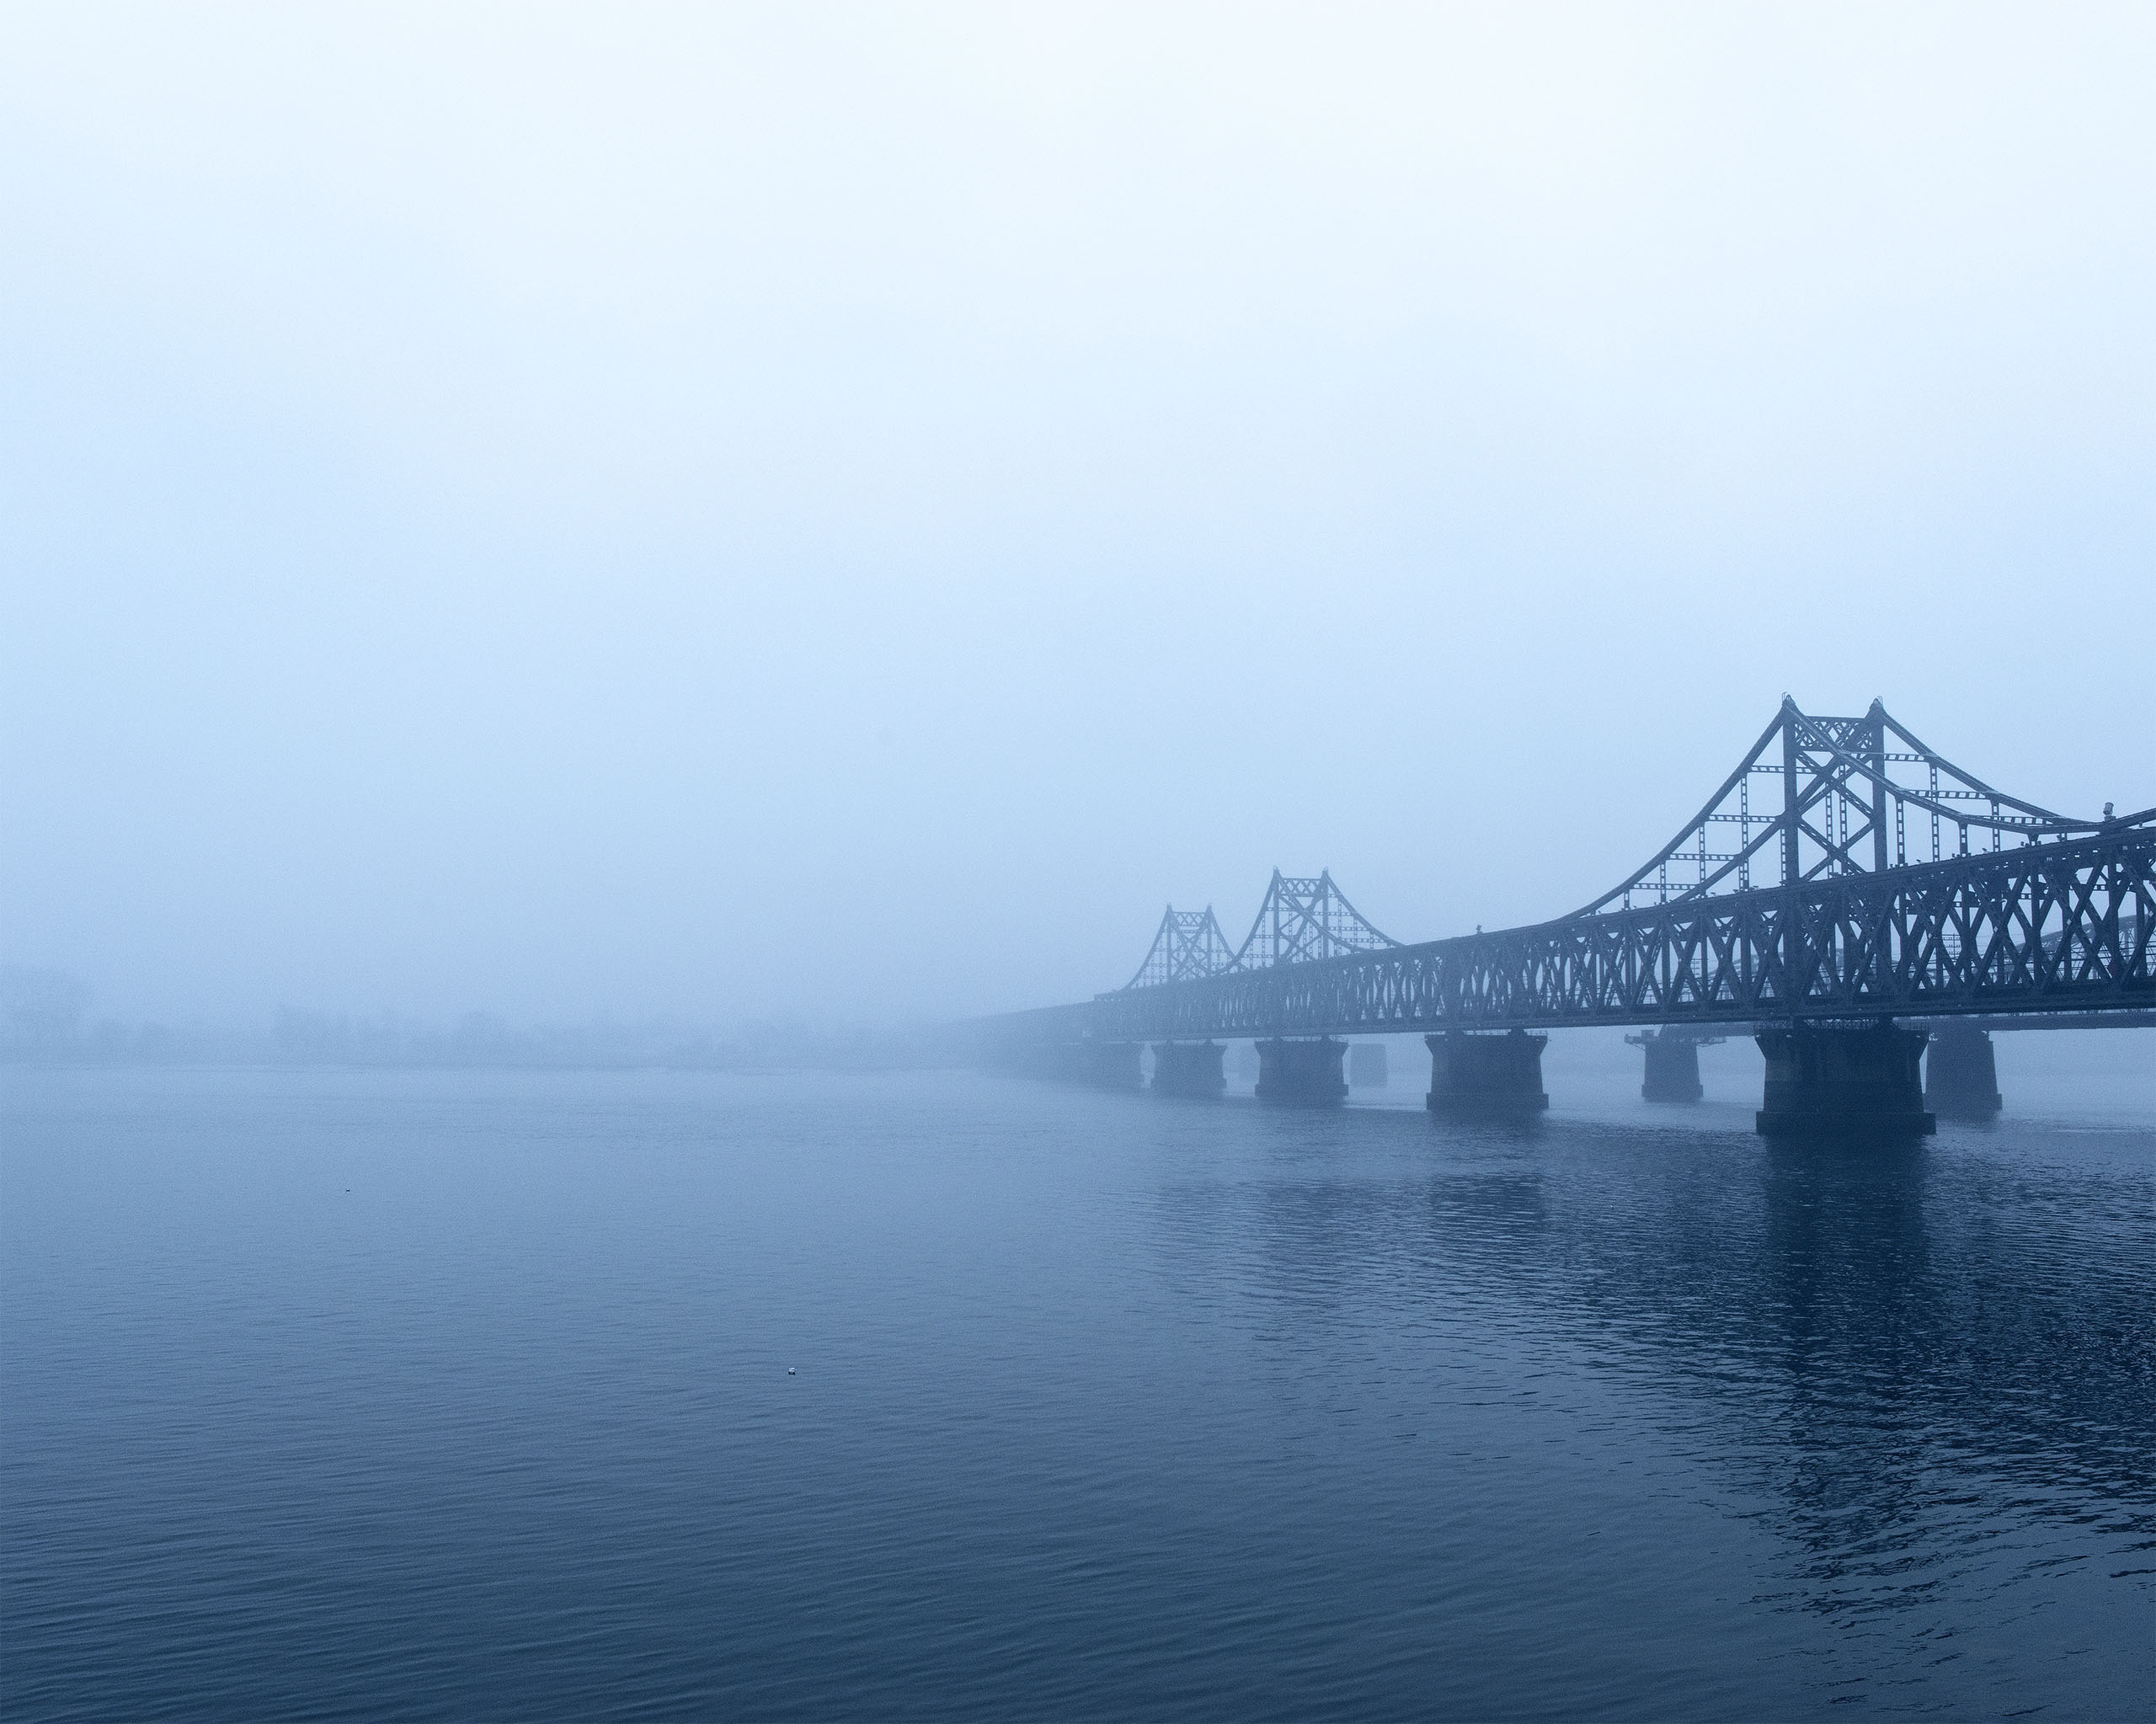 The Sino-Korean
                              Friendship Bridge
                              spans the Yalu River,
                              connecting the cities of
                              Dandong, China, and
                              Sinuiju, North Korea.